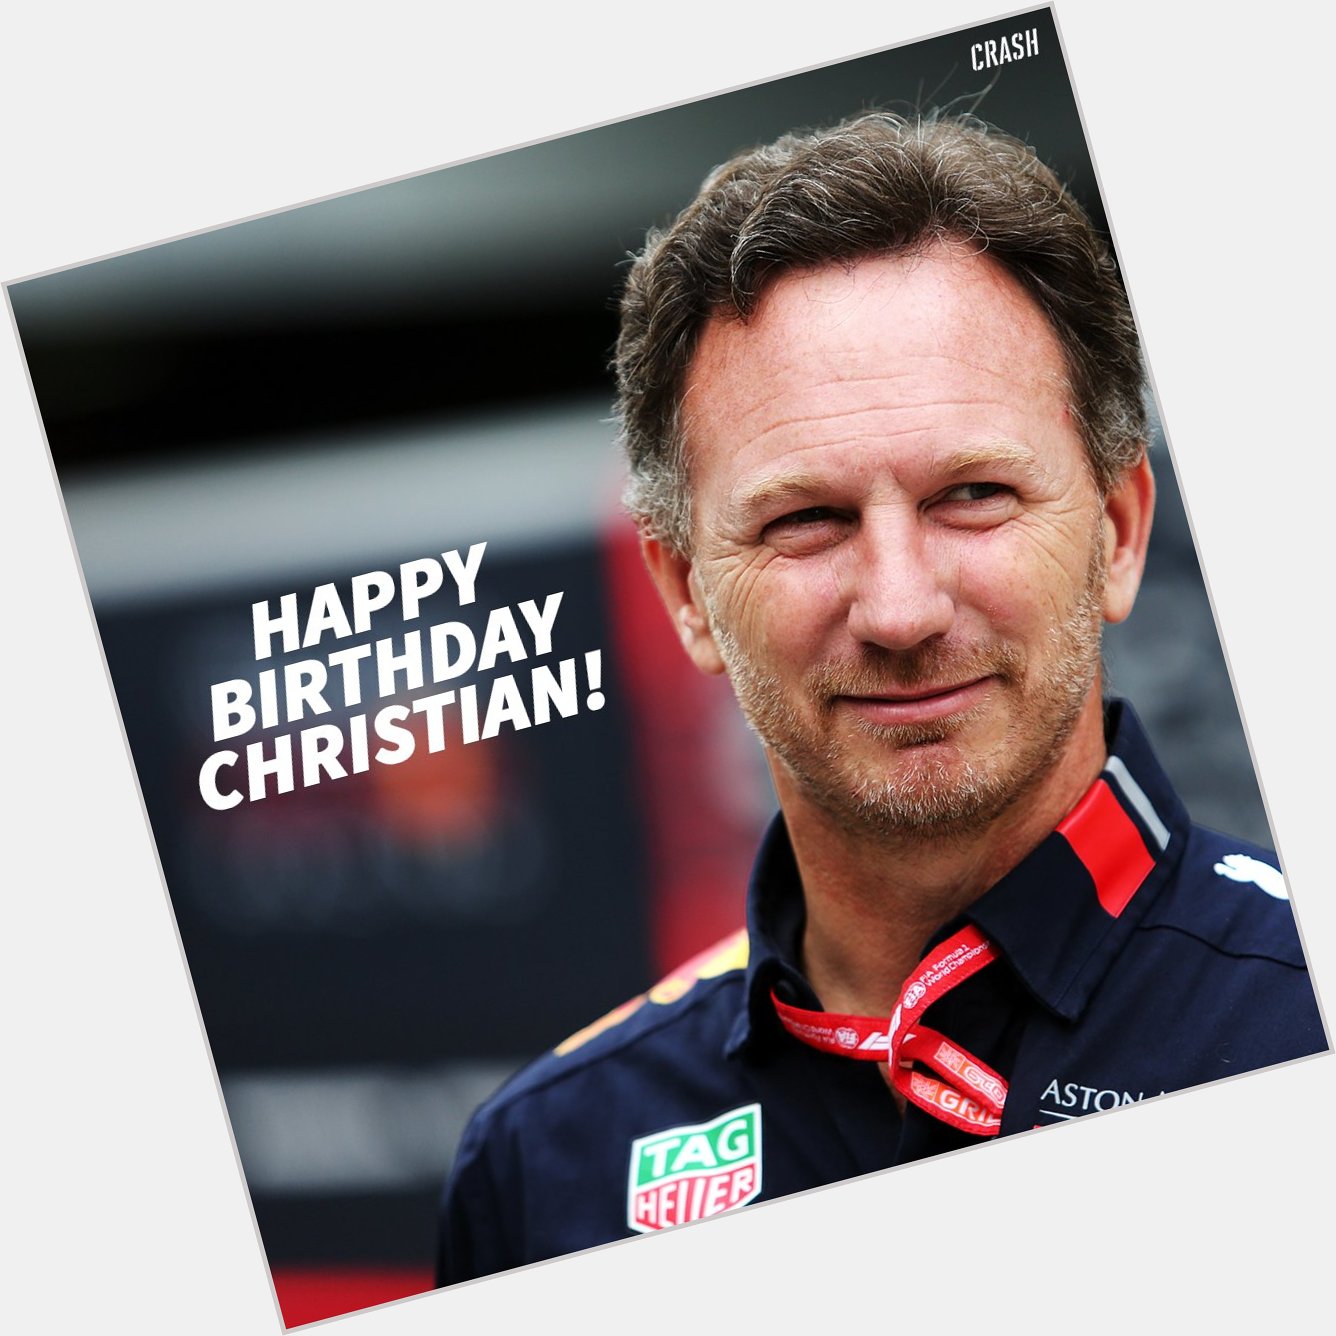 Wishing Red Bull team boss Christian Horner a very Happy Birthday today!  